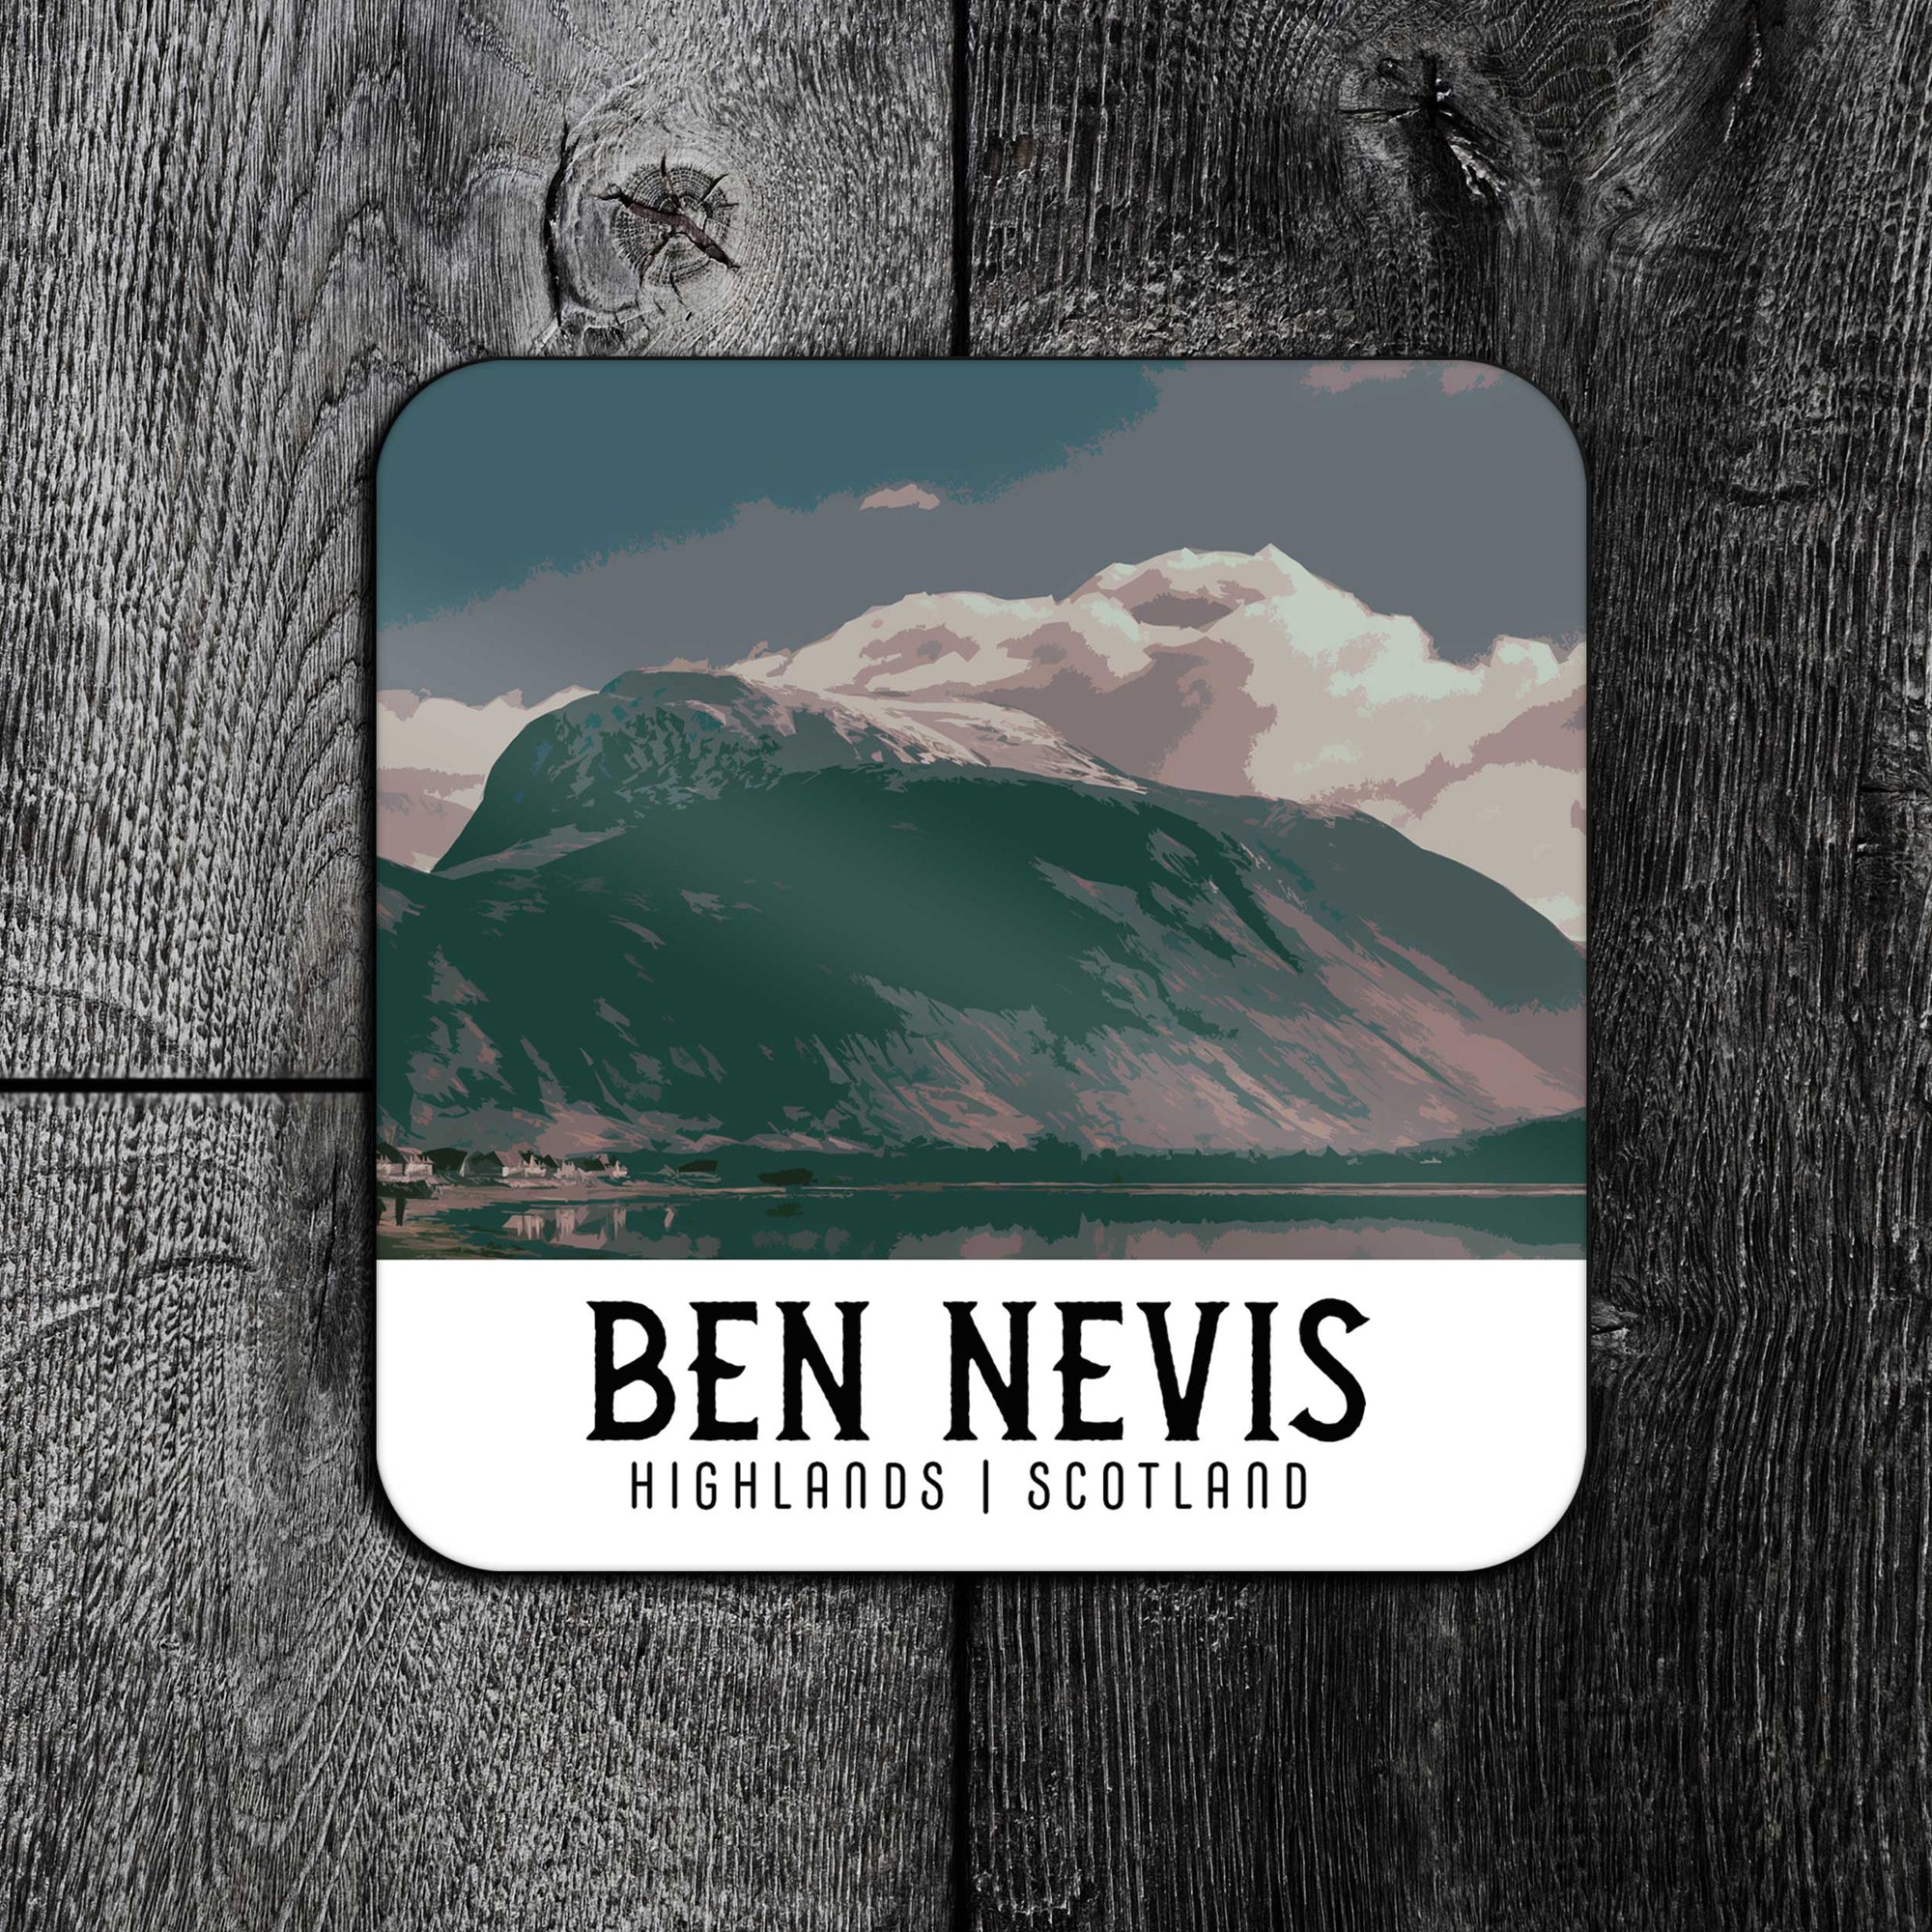 Vintage Travel Poster-Style Ben Nevis Coaster – UK's Highest Peak